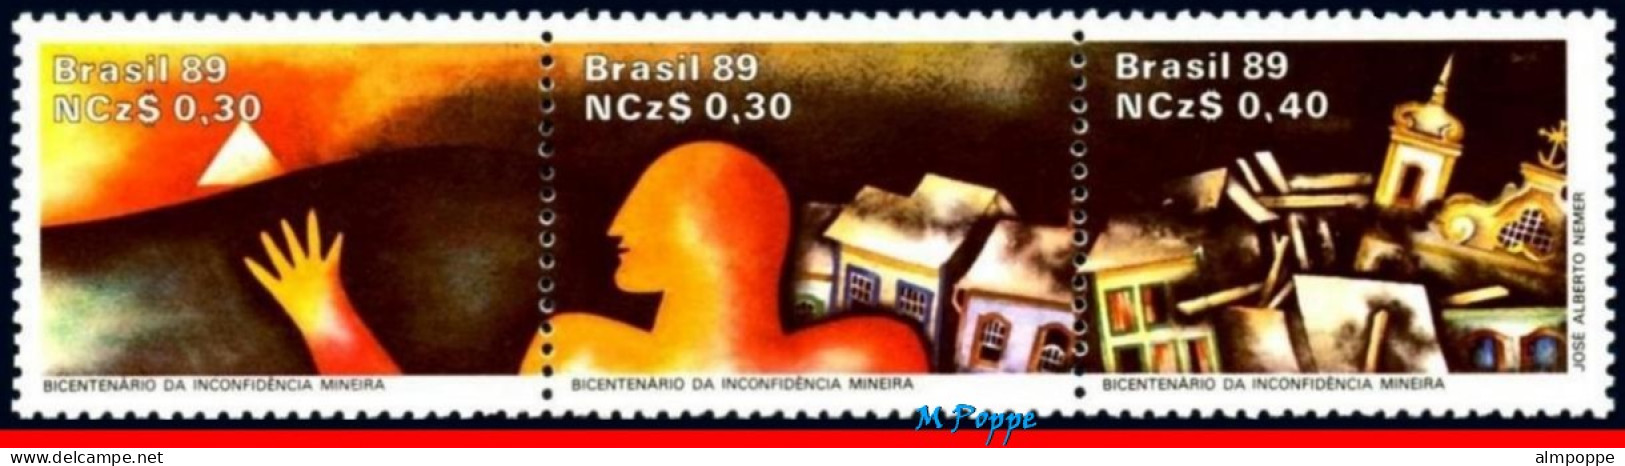 Ref. BR-2166-FO BRAZIL 1989 - INDEPENDENCE MOVEMENT,CONSPIRACY, MINAS, MI# 2295-97,SHEET MNH, HISTORY 30V Sc# 2166 - Blocks & Kleinbögen